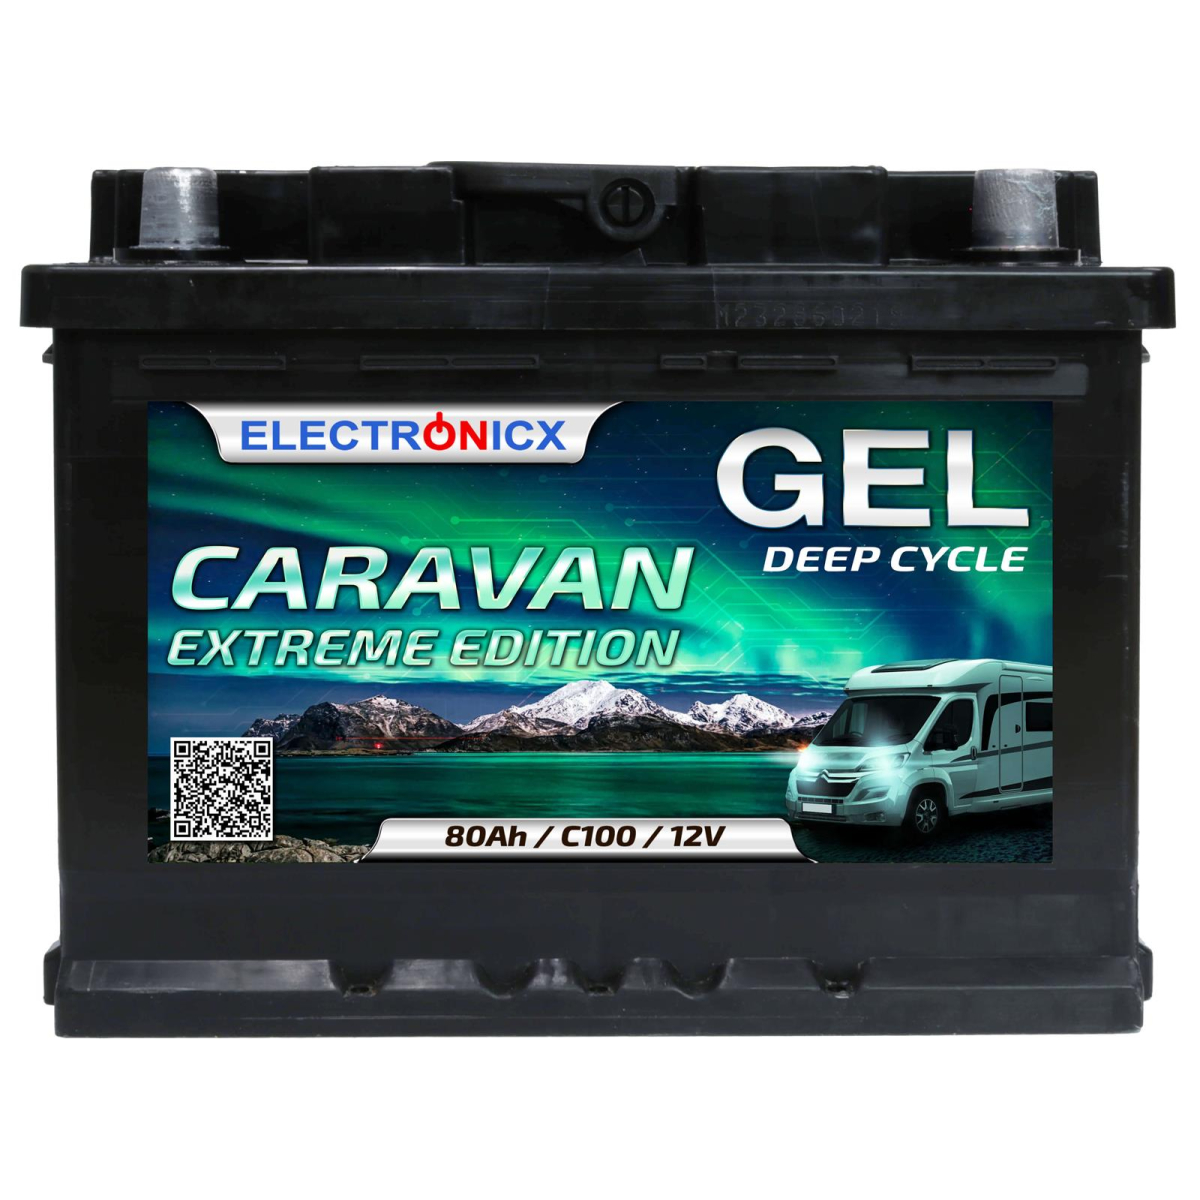 Electronicx Caravan extreme Edition Gel Battery 80 ah 12v Motorhome Boat Supply